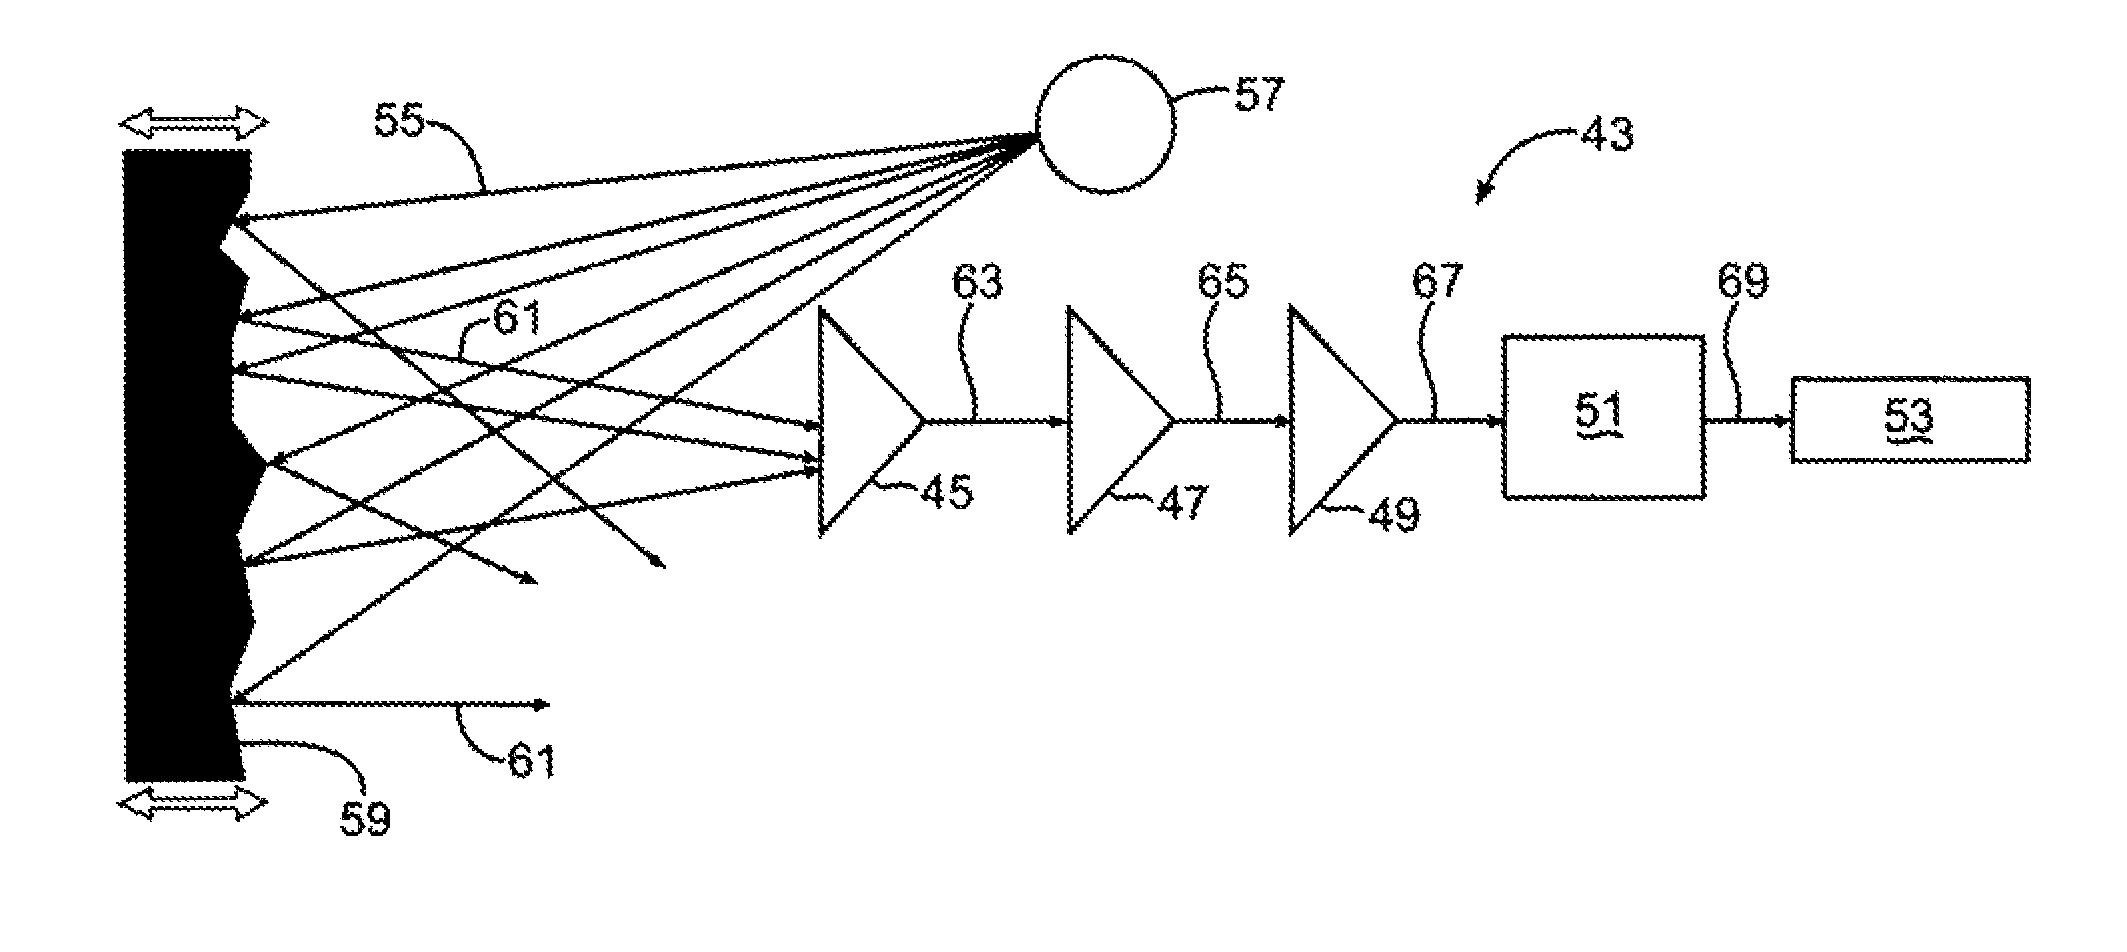 Remote passive sensing of a vibration signature using modulated light